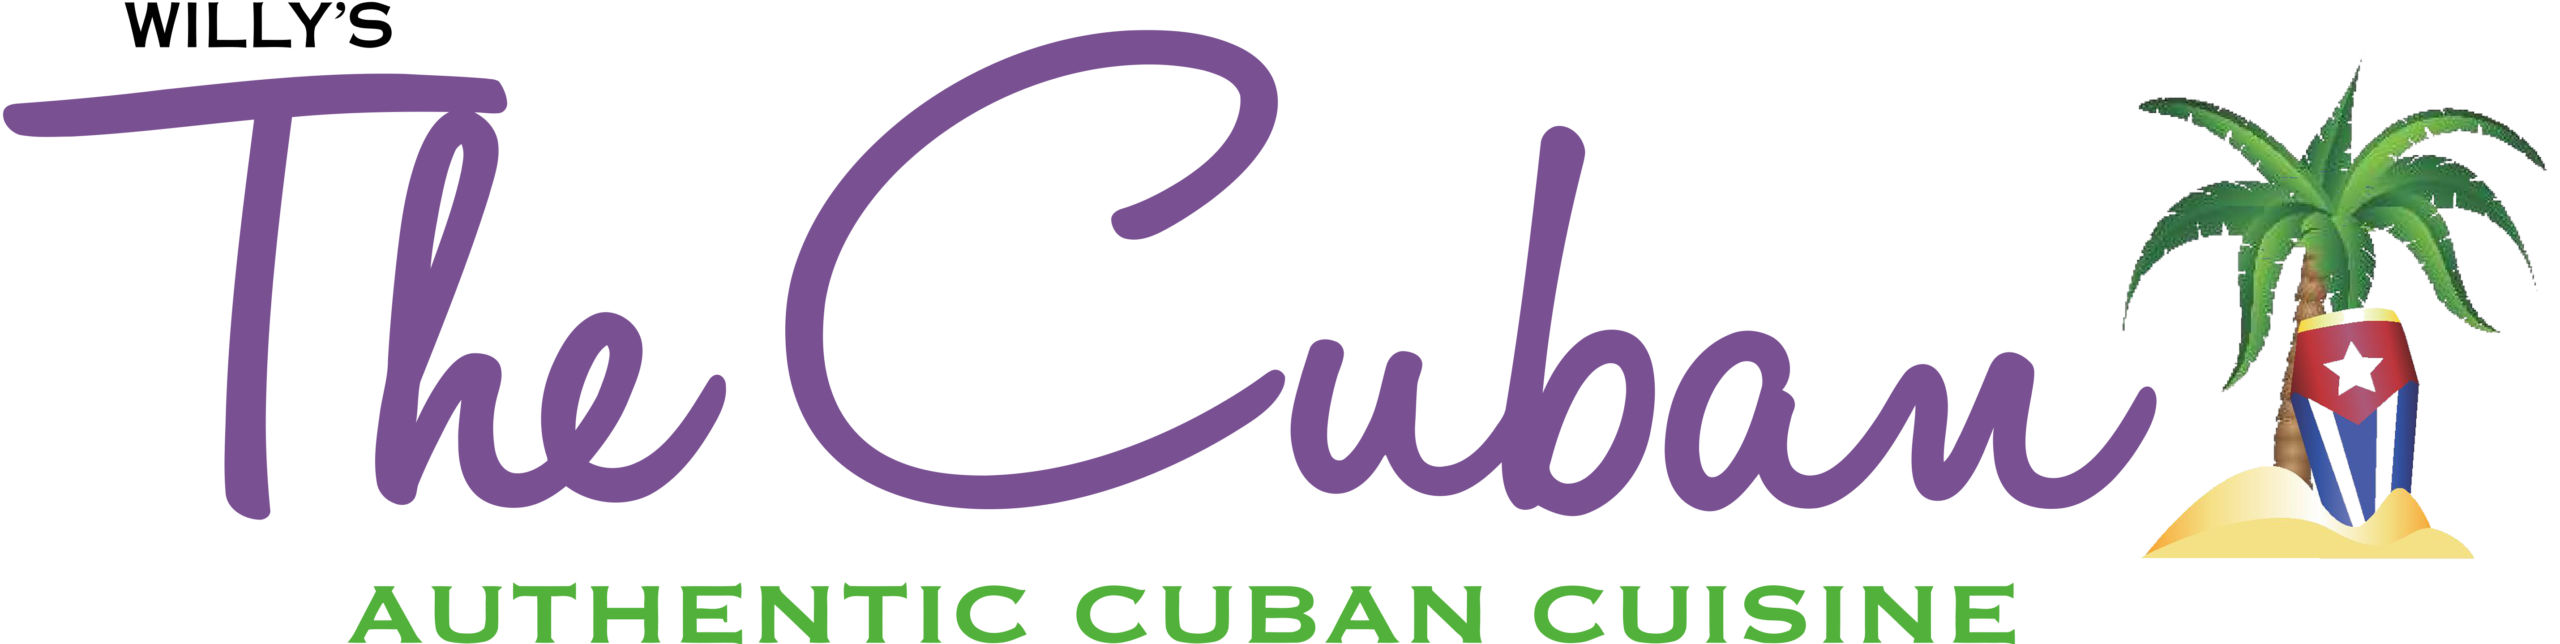 The Cuban | Authentic Cuban Cuisine